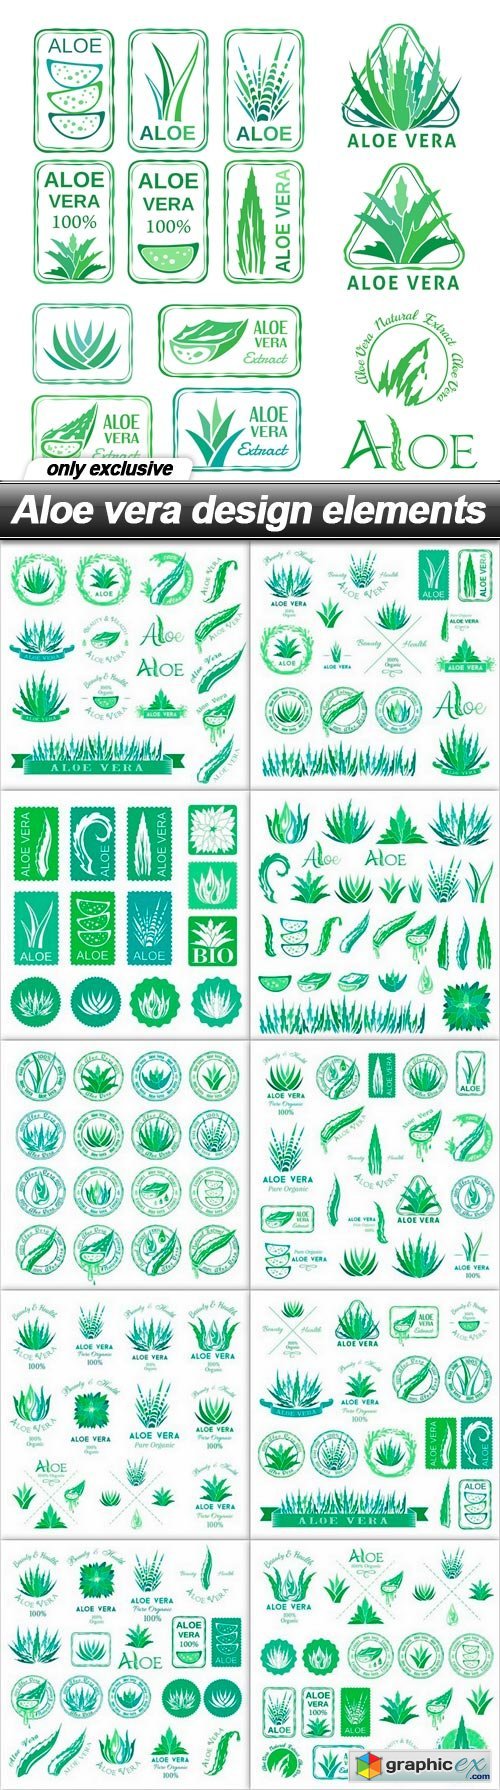 Aloe vera design elements - 11 EPS